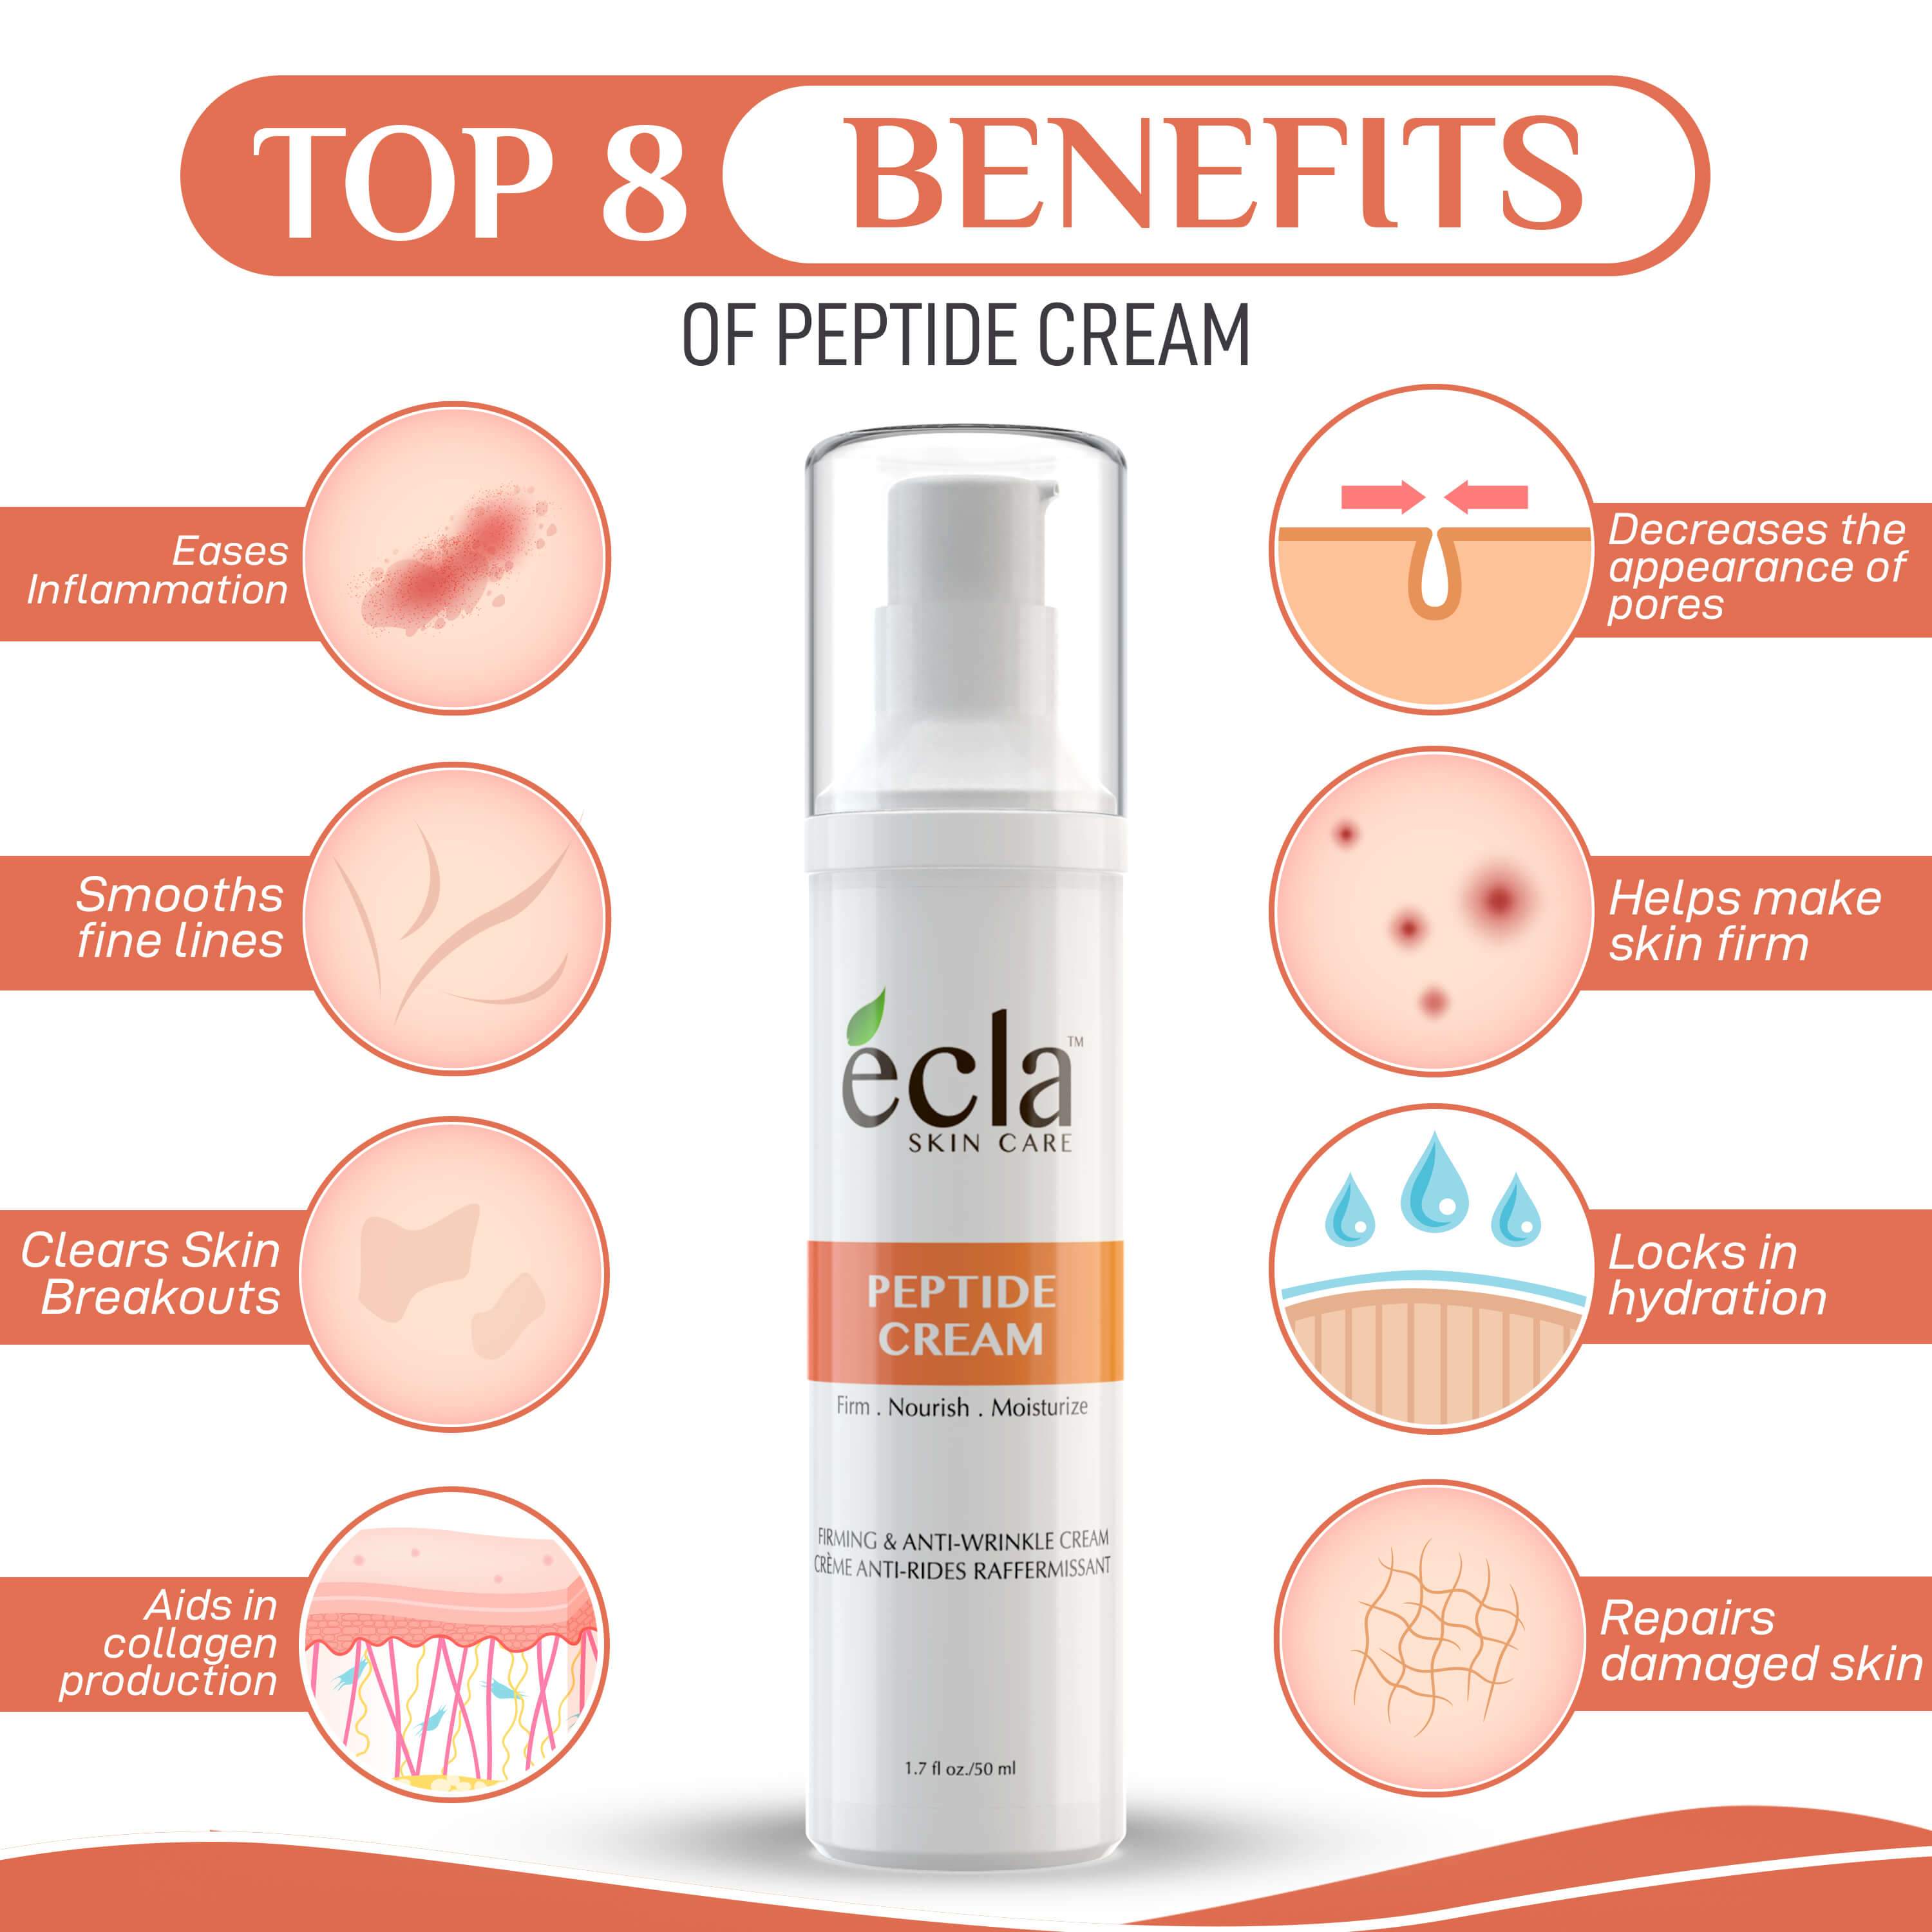 Top 8 Benefits of Peptide Cream